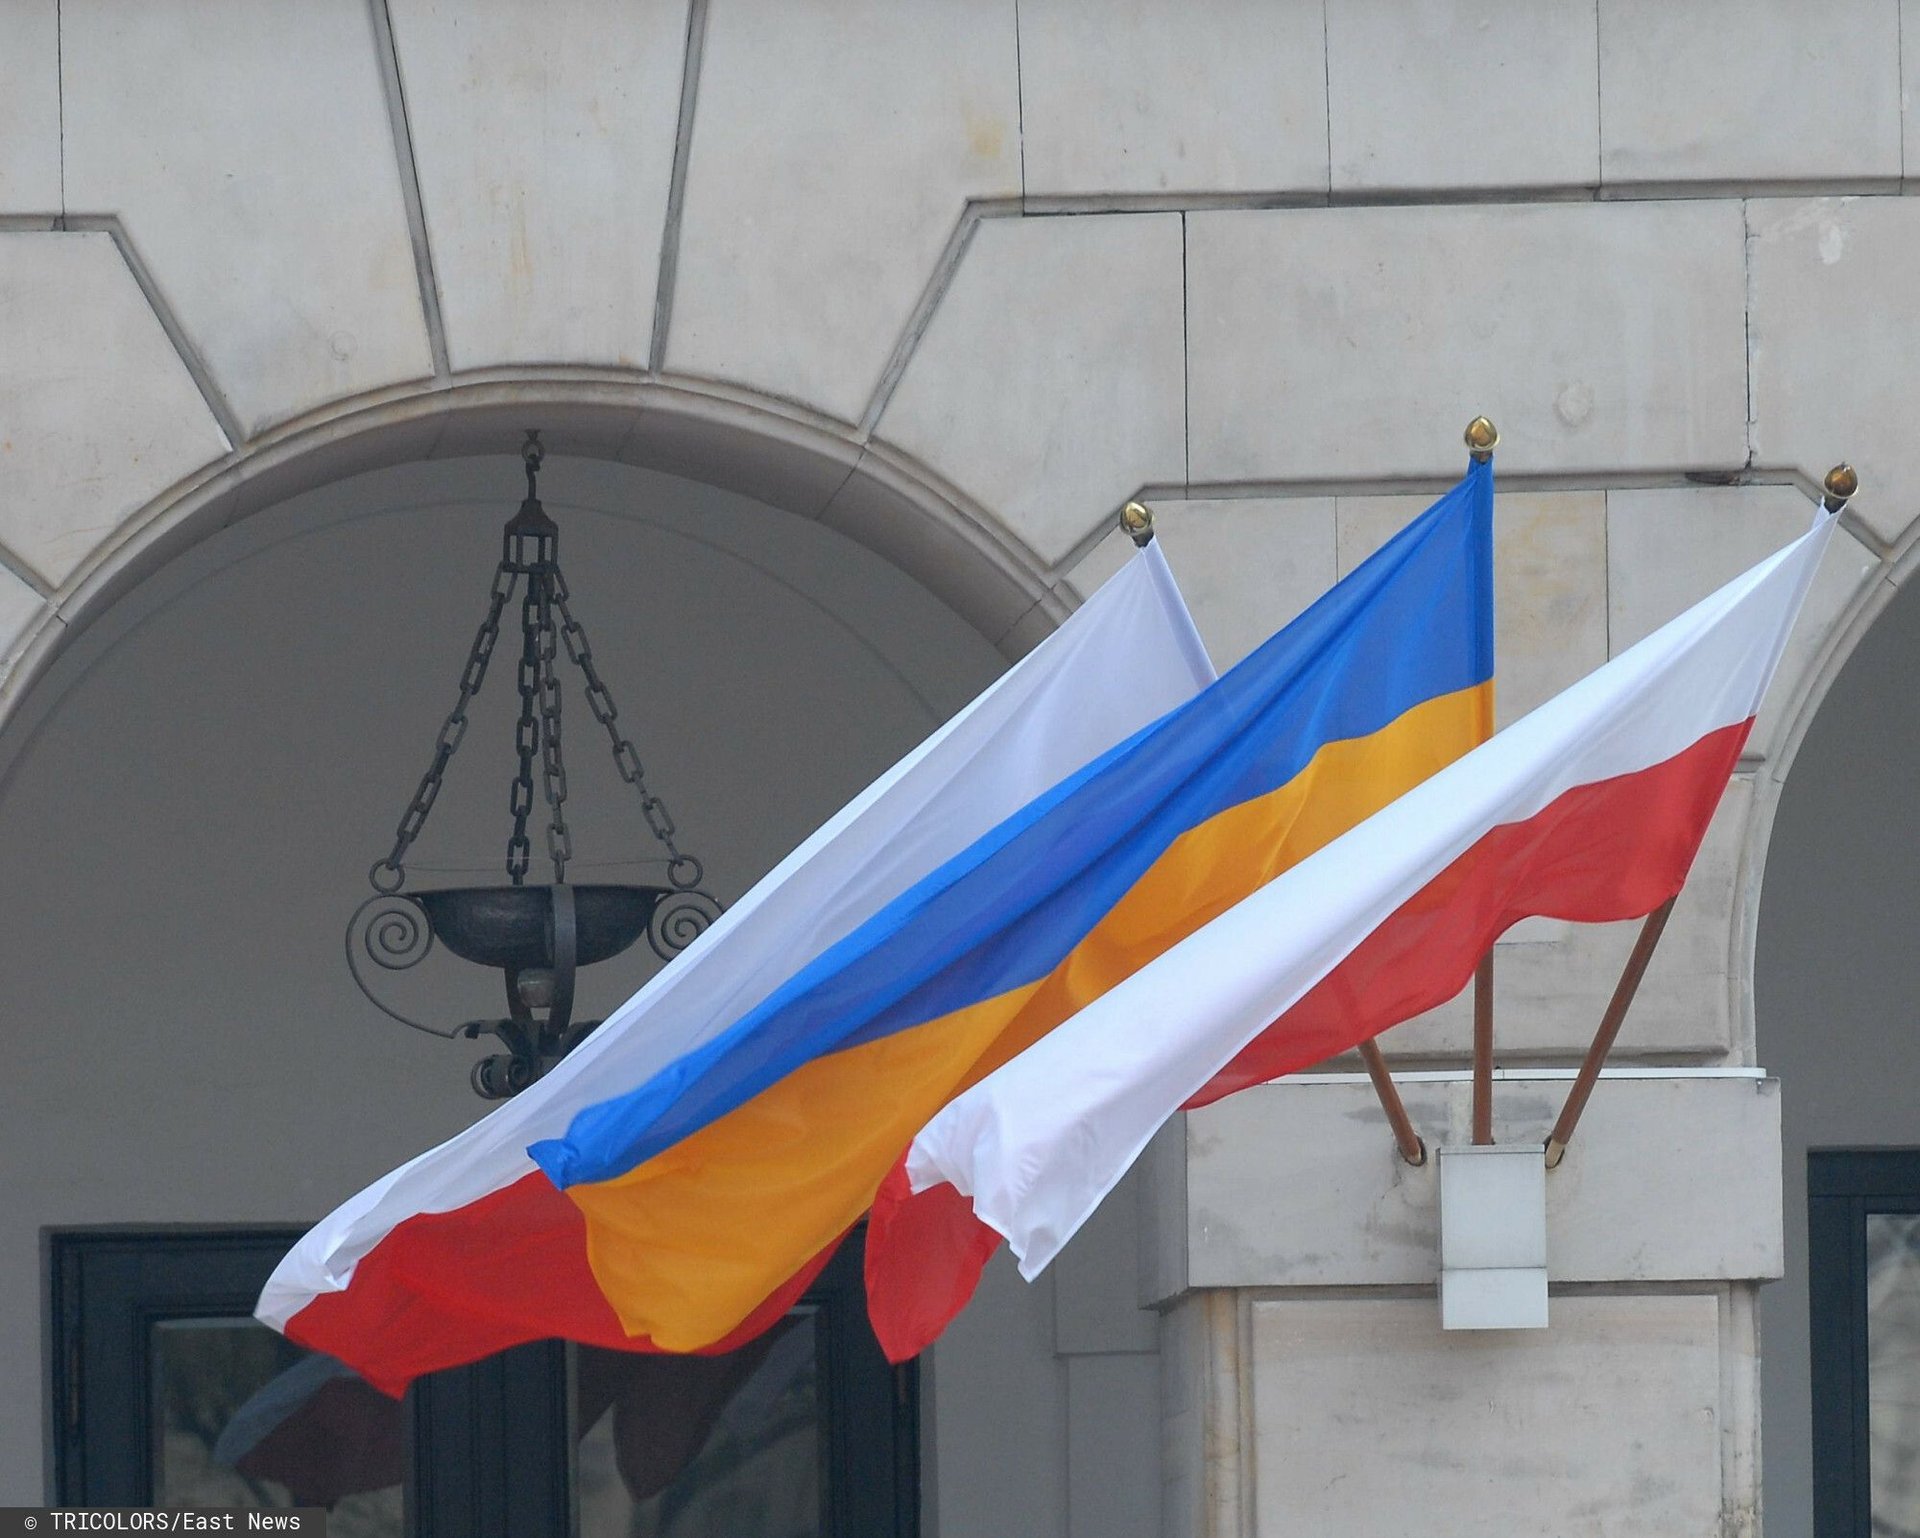 PHOTO: TRICOLORS/EAST NEWS 12.05.2006 wizyta - Prezydent Ukrainy - Wiktor Juszczenko N/Z:flagi flaga polska ukraina